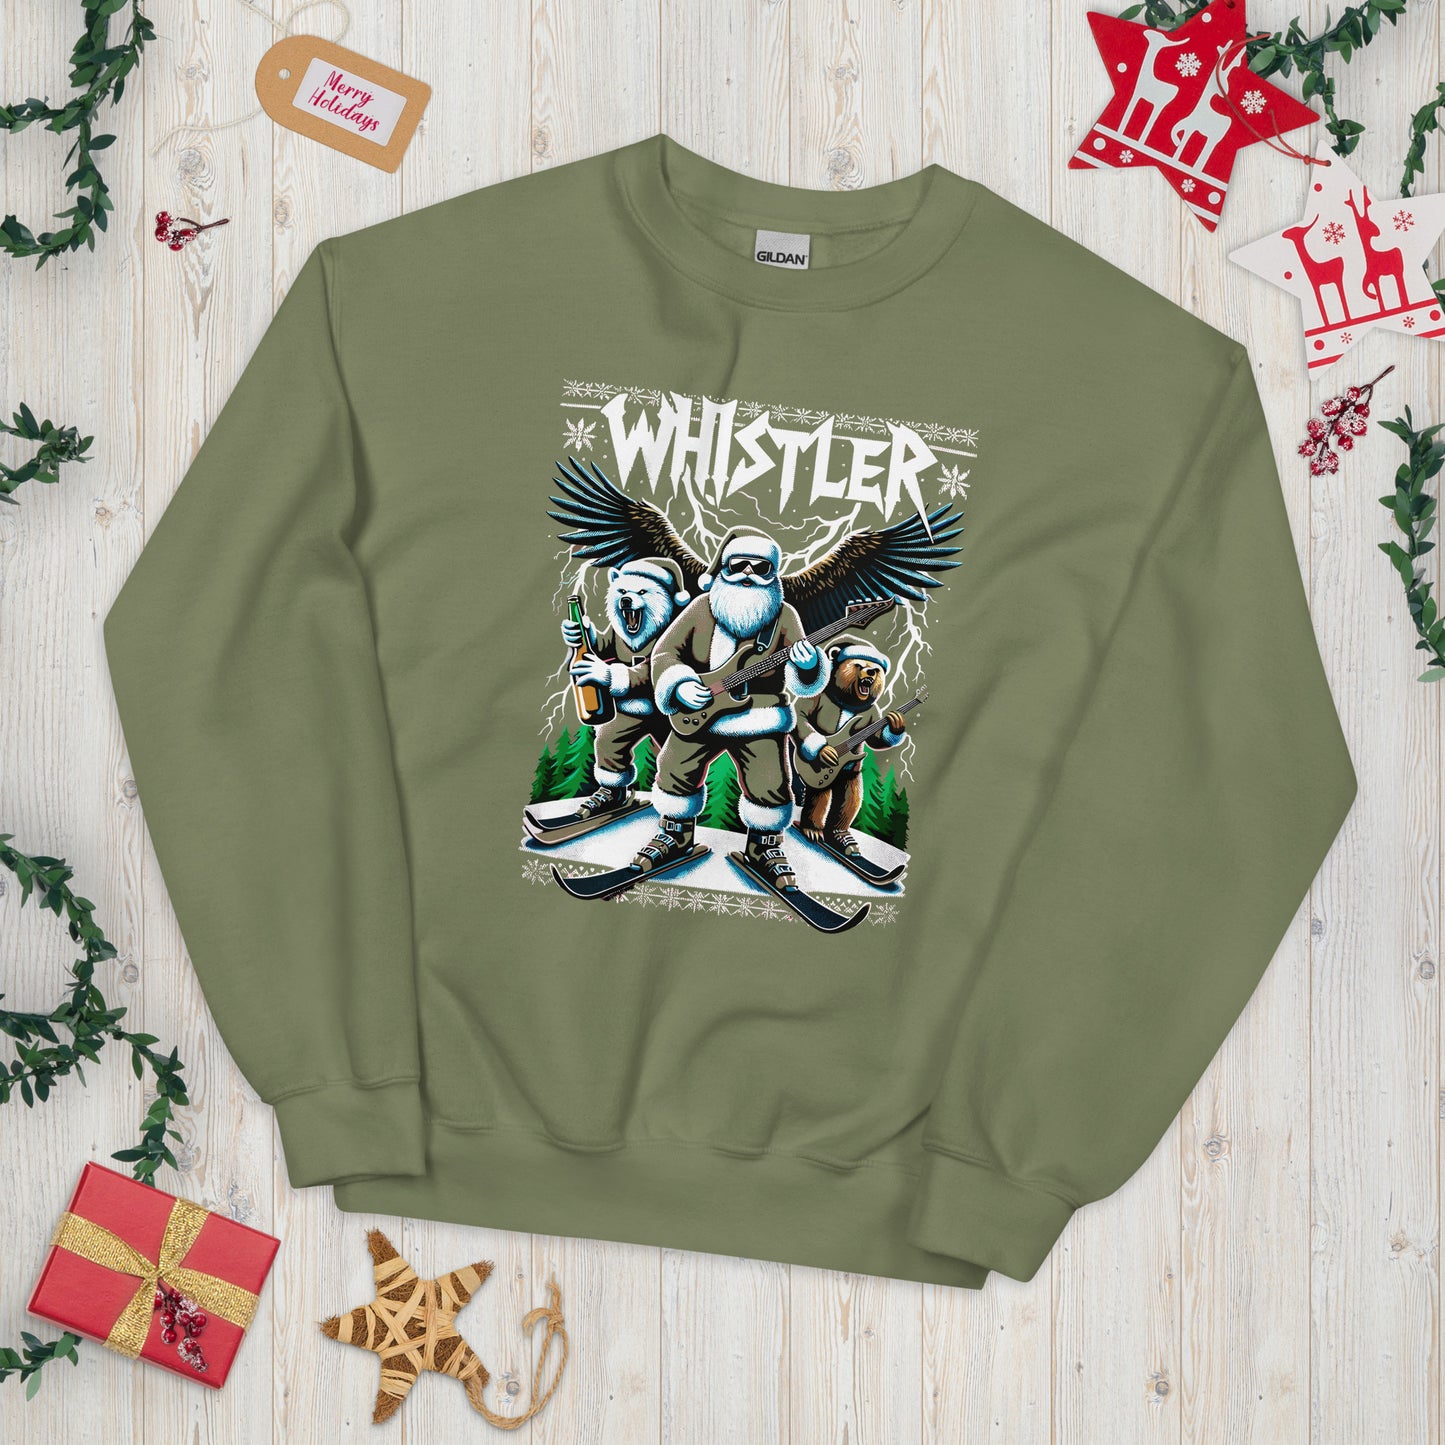 Rockstar Santa Does Whistler